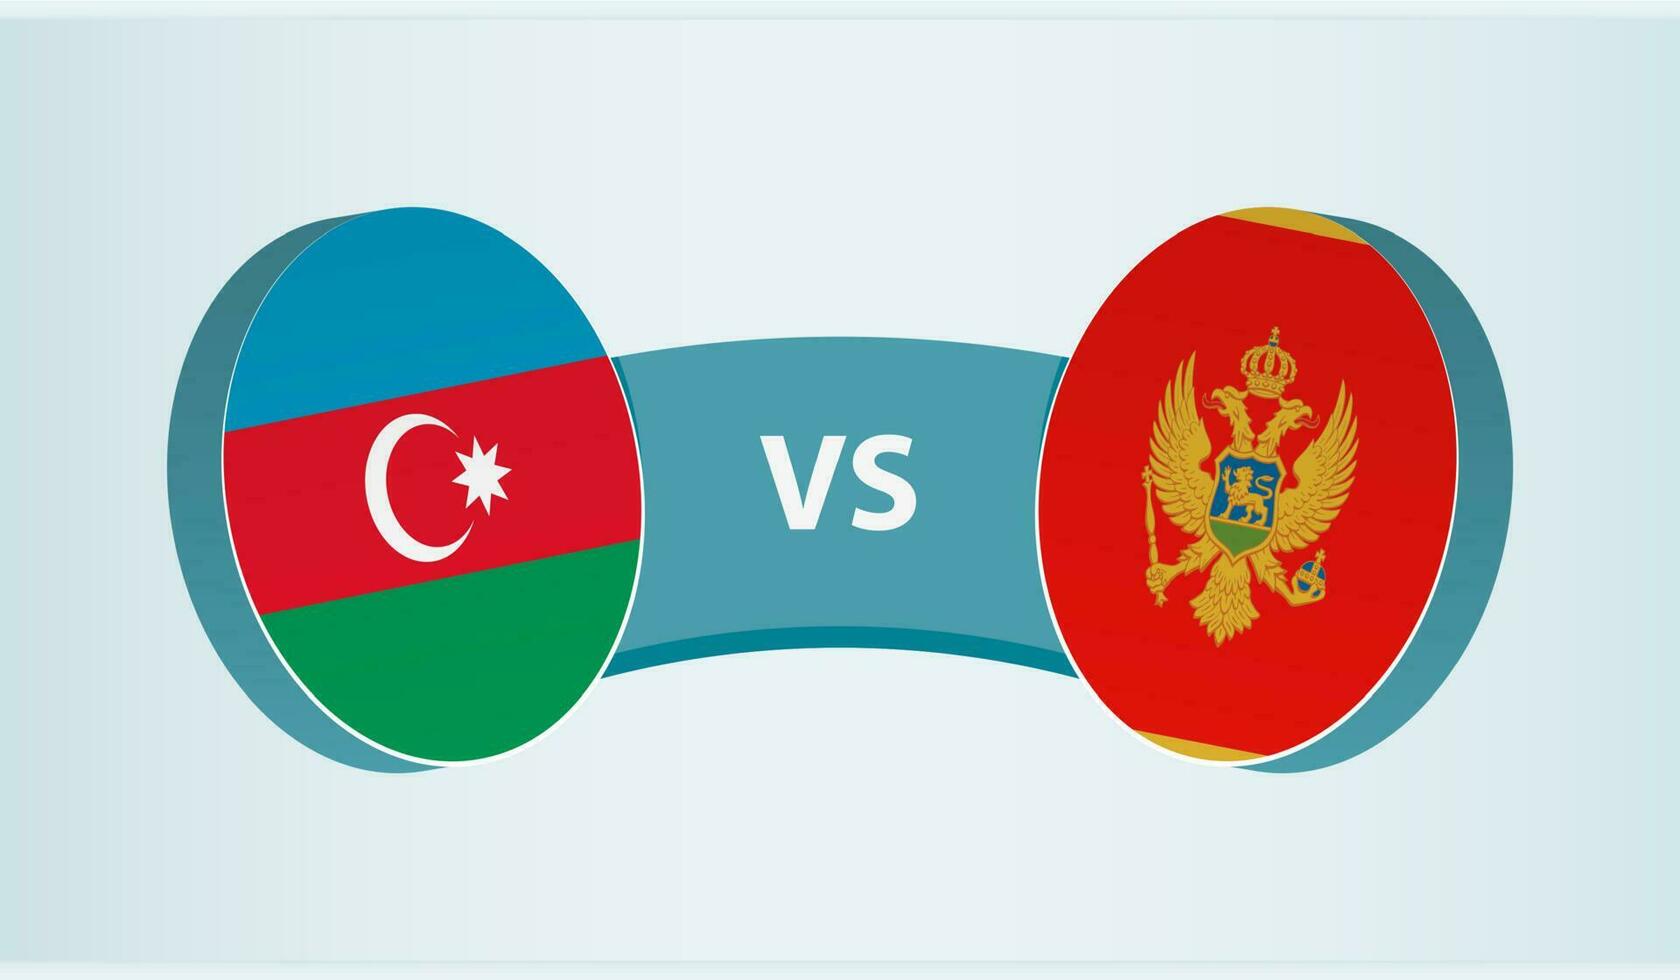 Azerbaijan versus Montenegro, team sports competition concept. vector